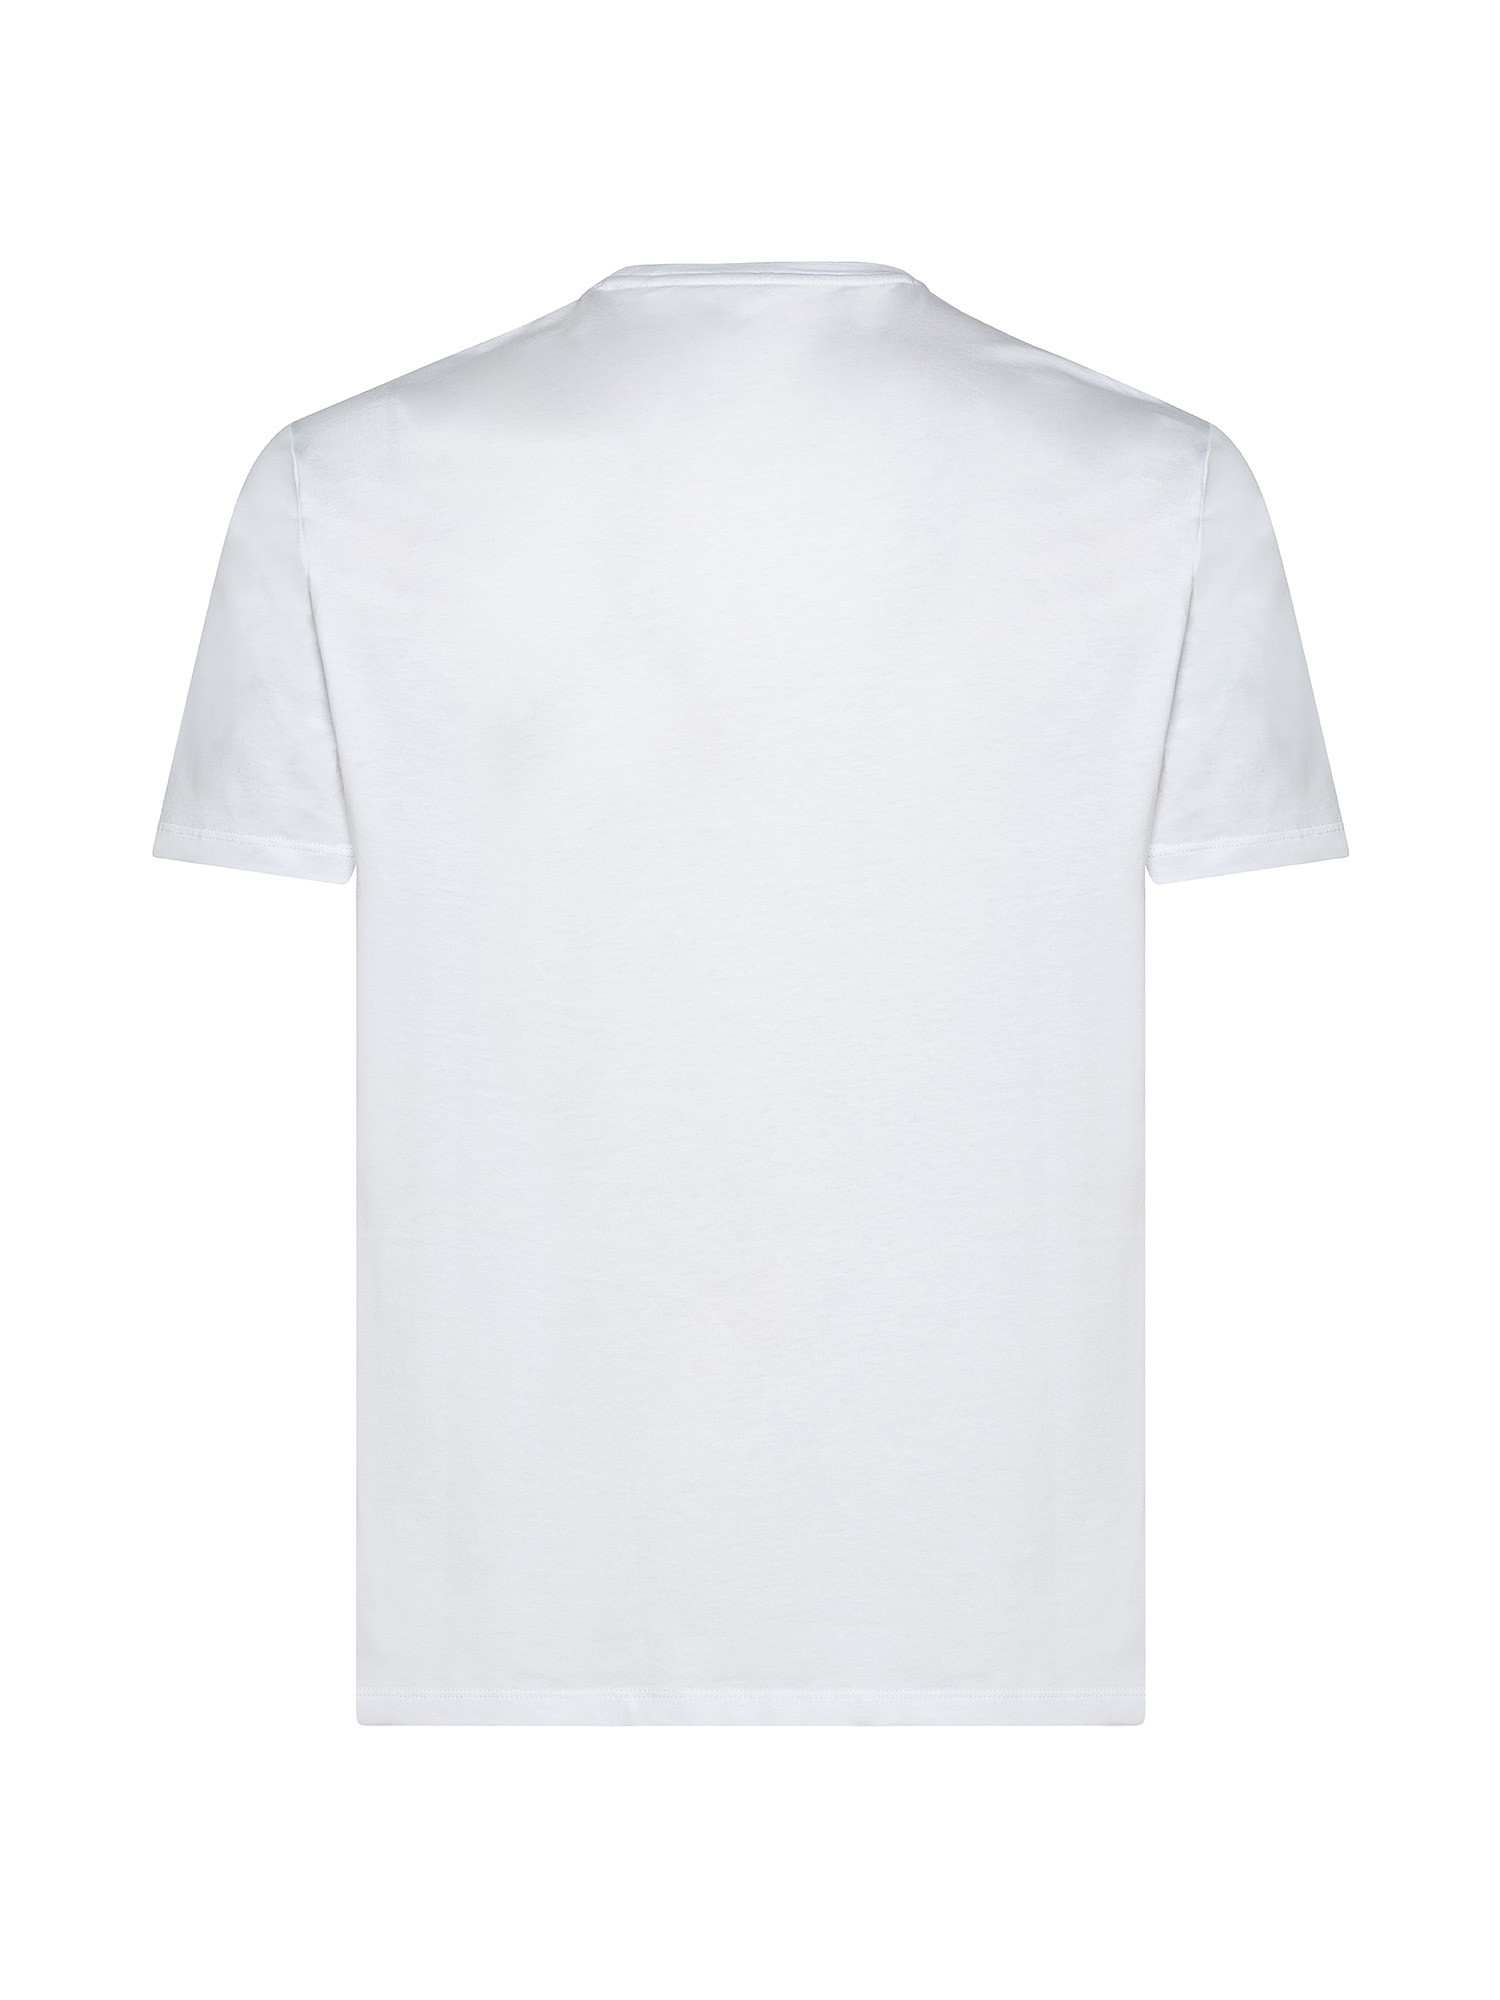 T-shirt, White, large image number 1